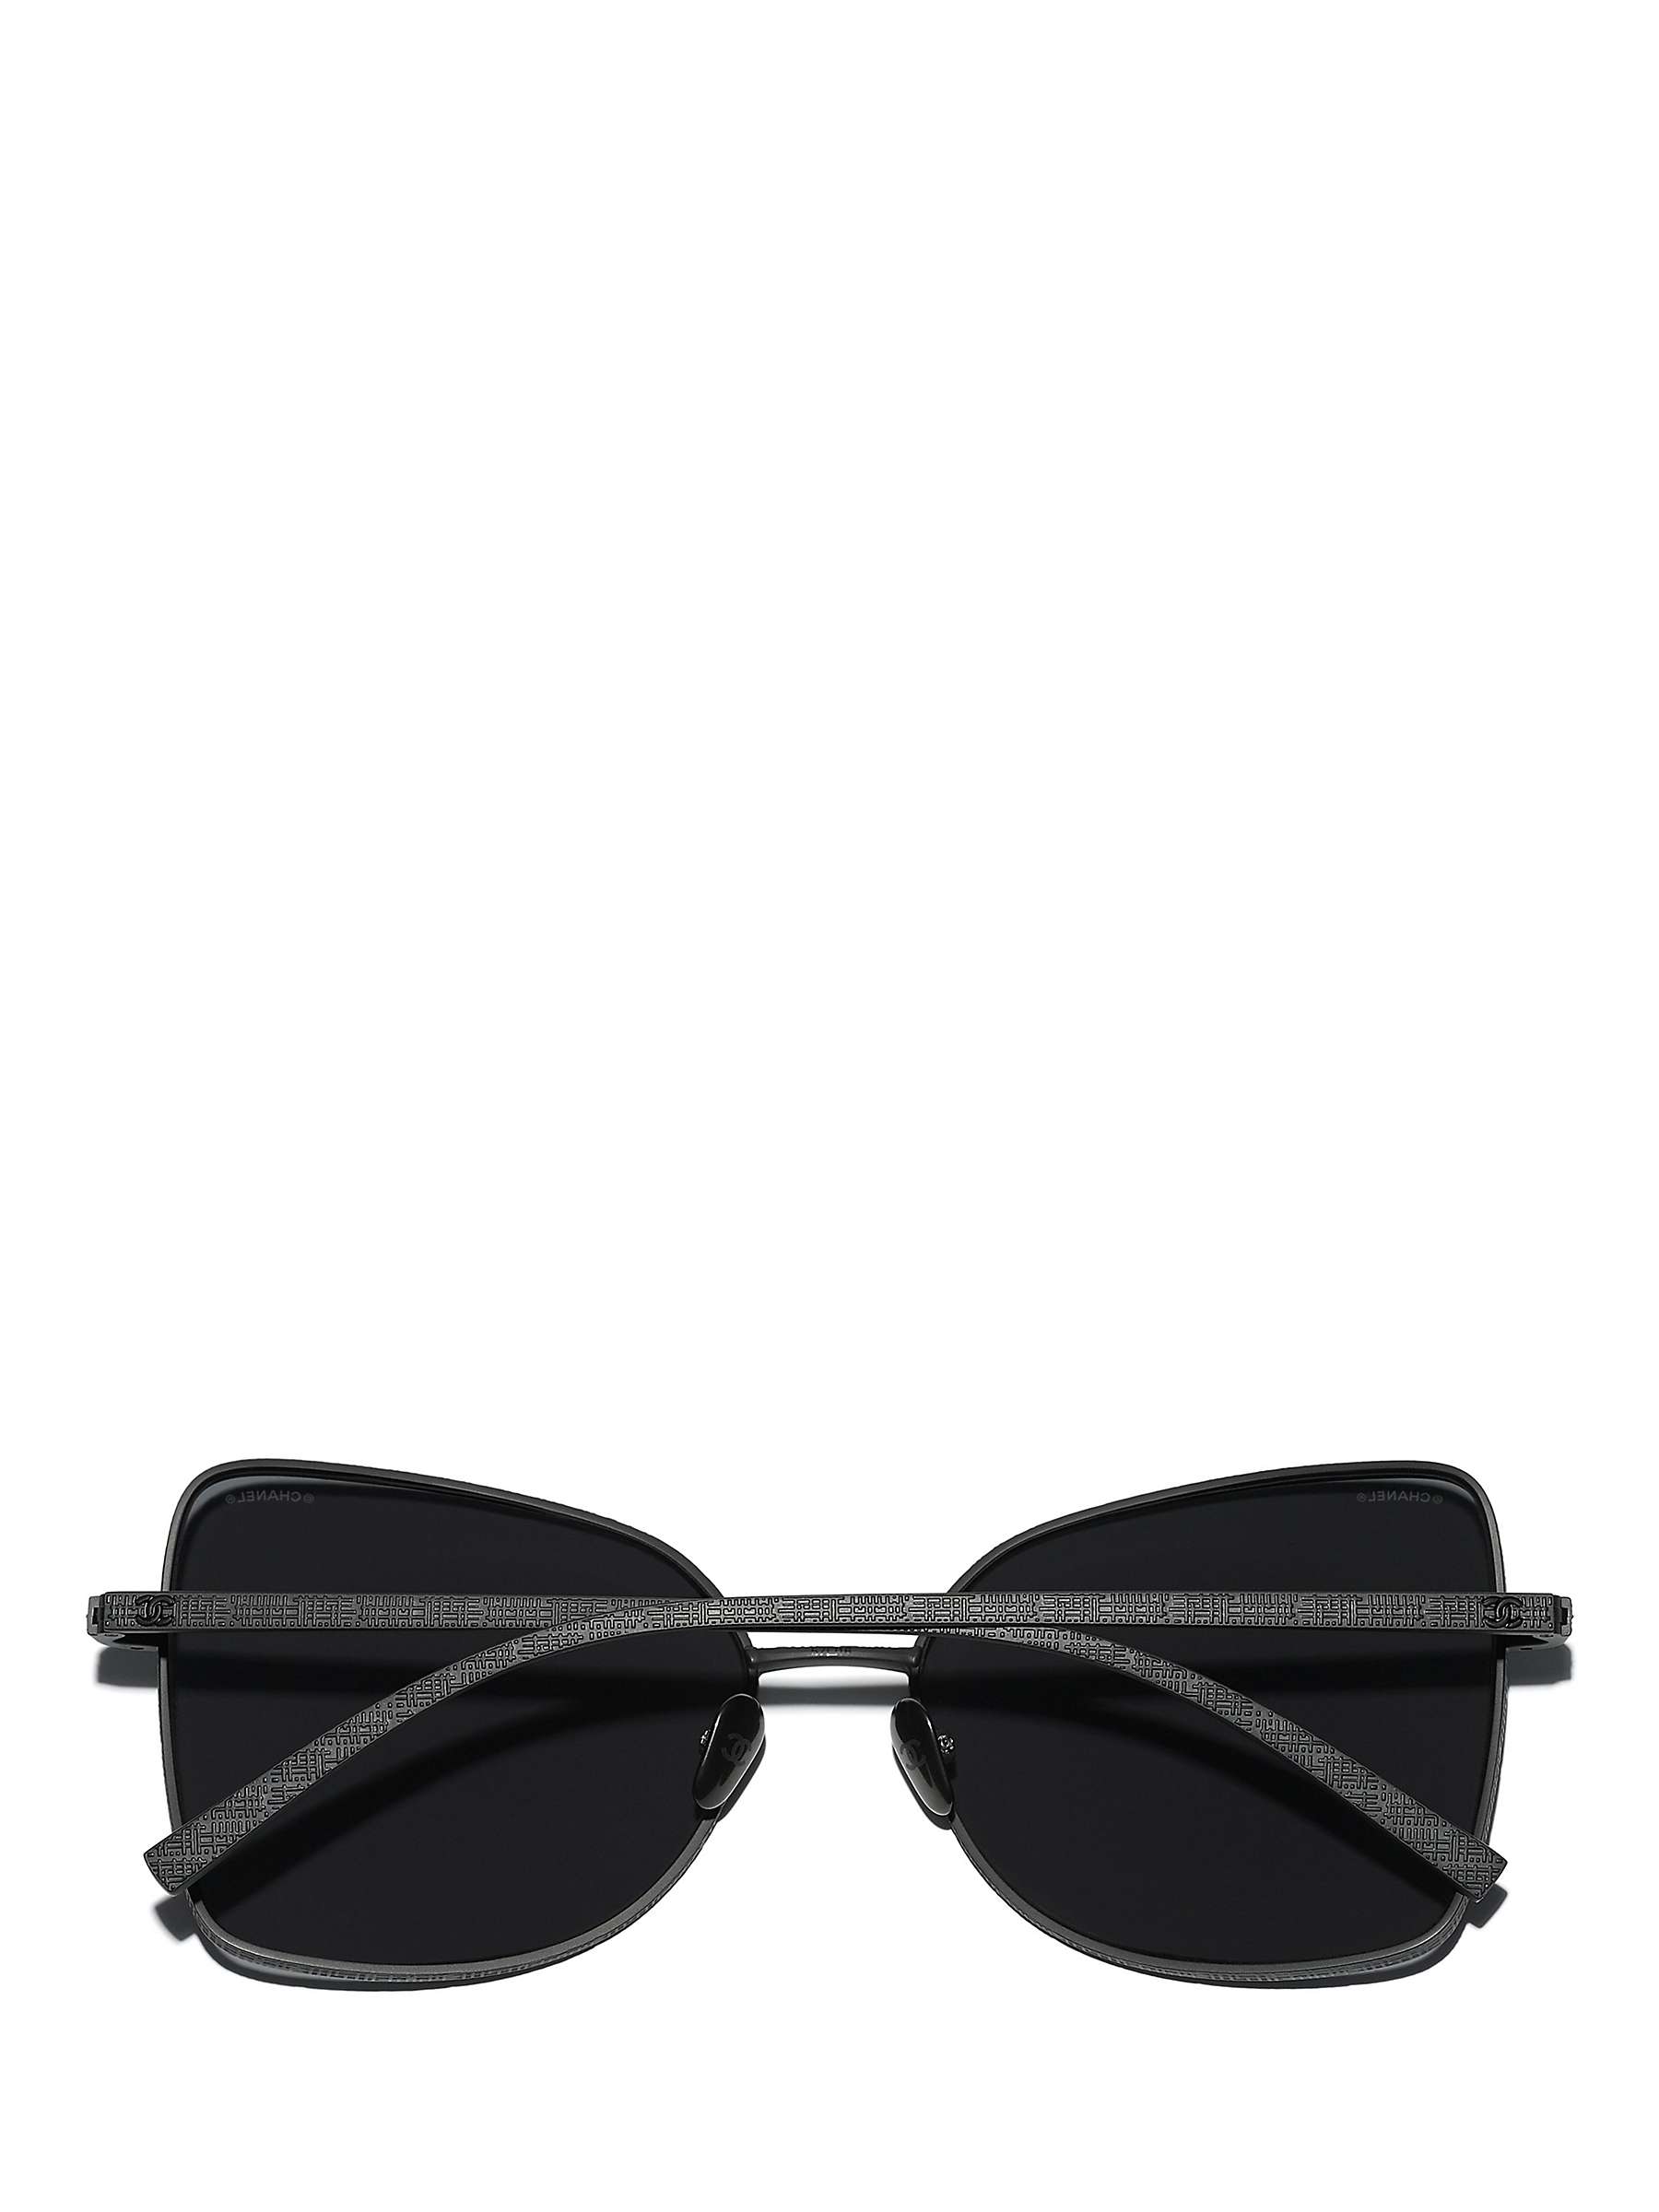 Buy CHANEL Irregular Sunglasses CH4263T Black/Grey Online at johnlewis.com